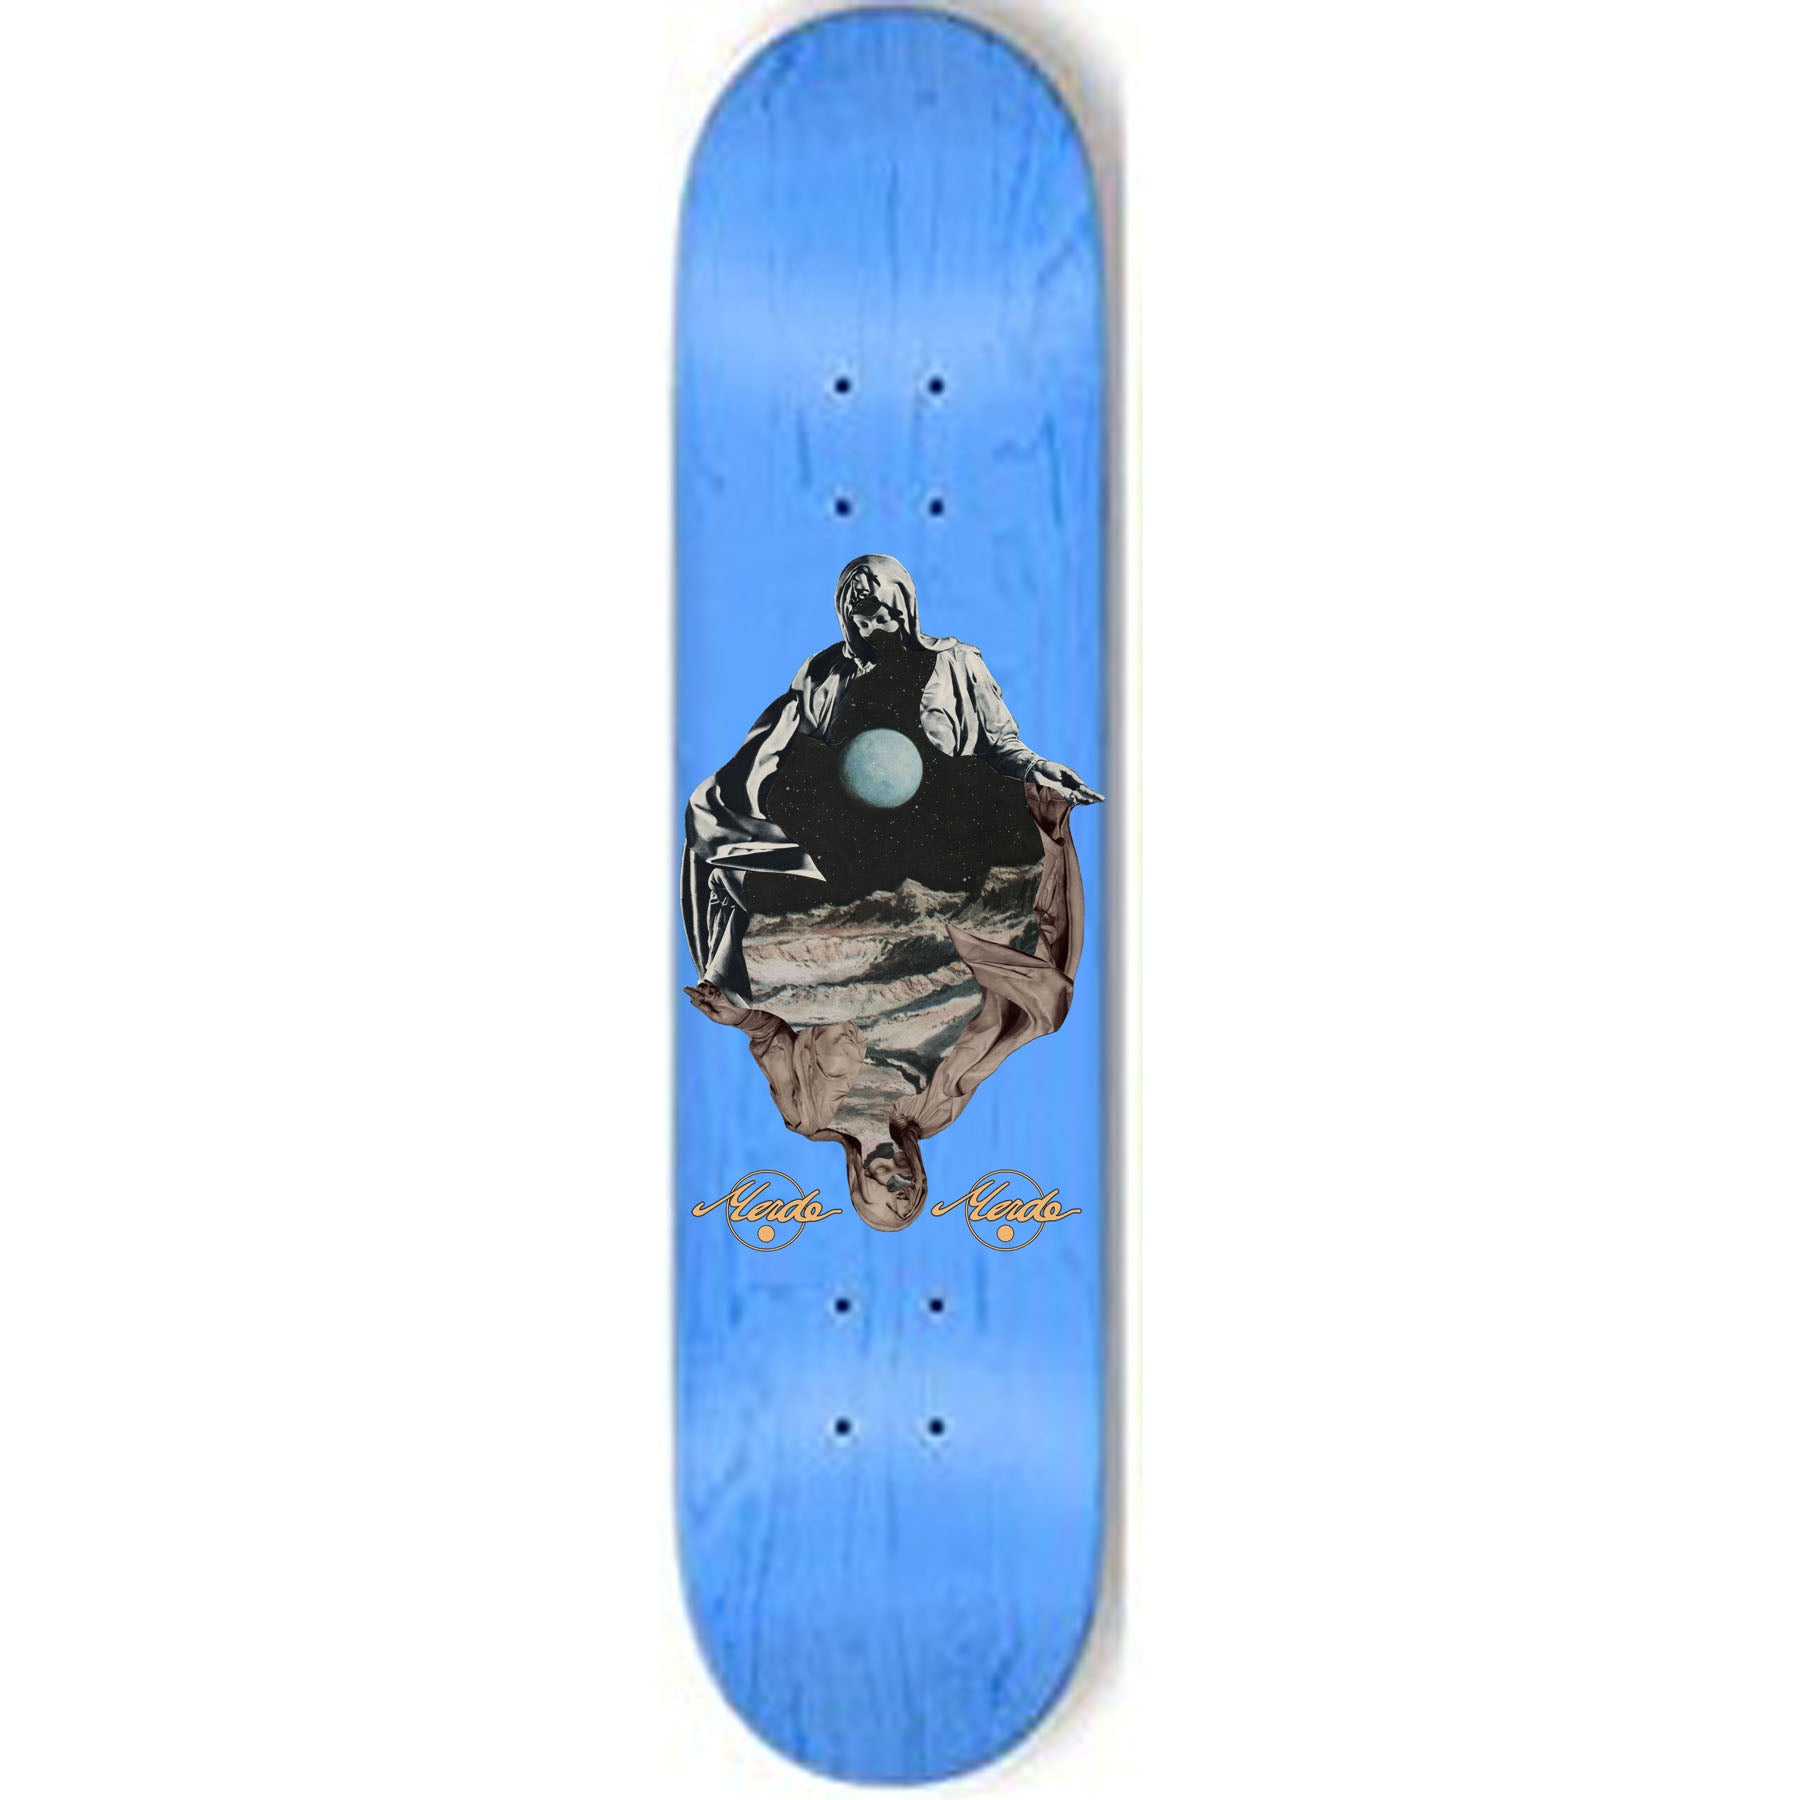 Merde Skateboards "Myosotis- Ojerum" Assorted Sized Deck